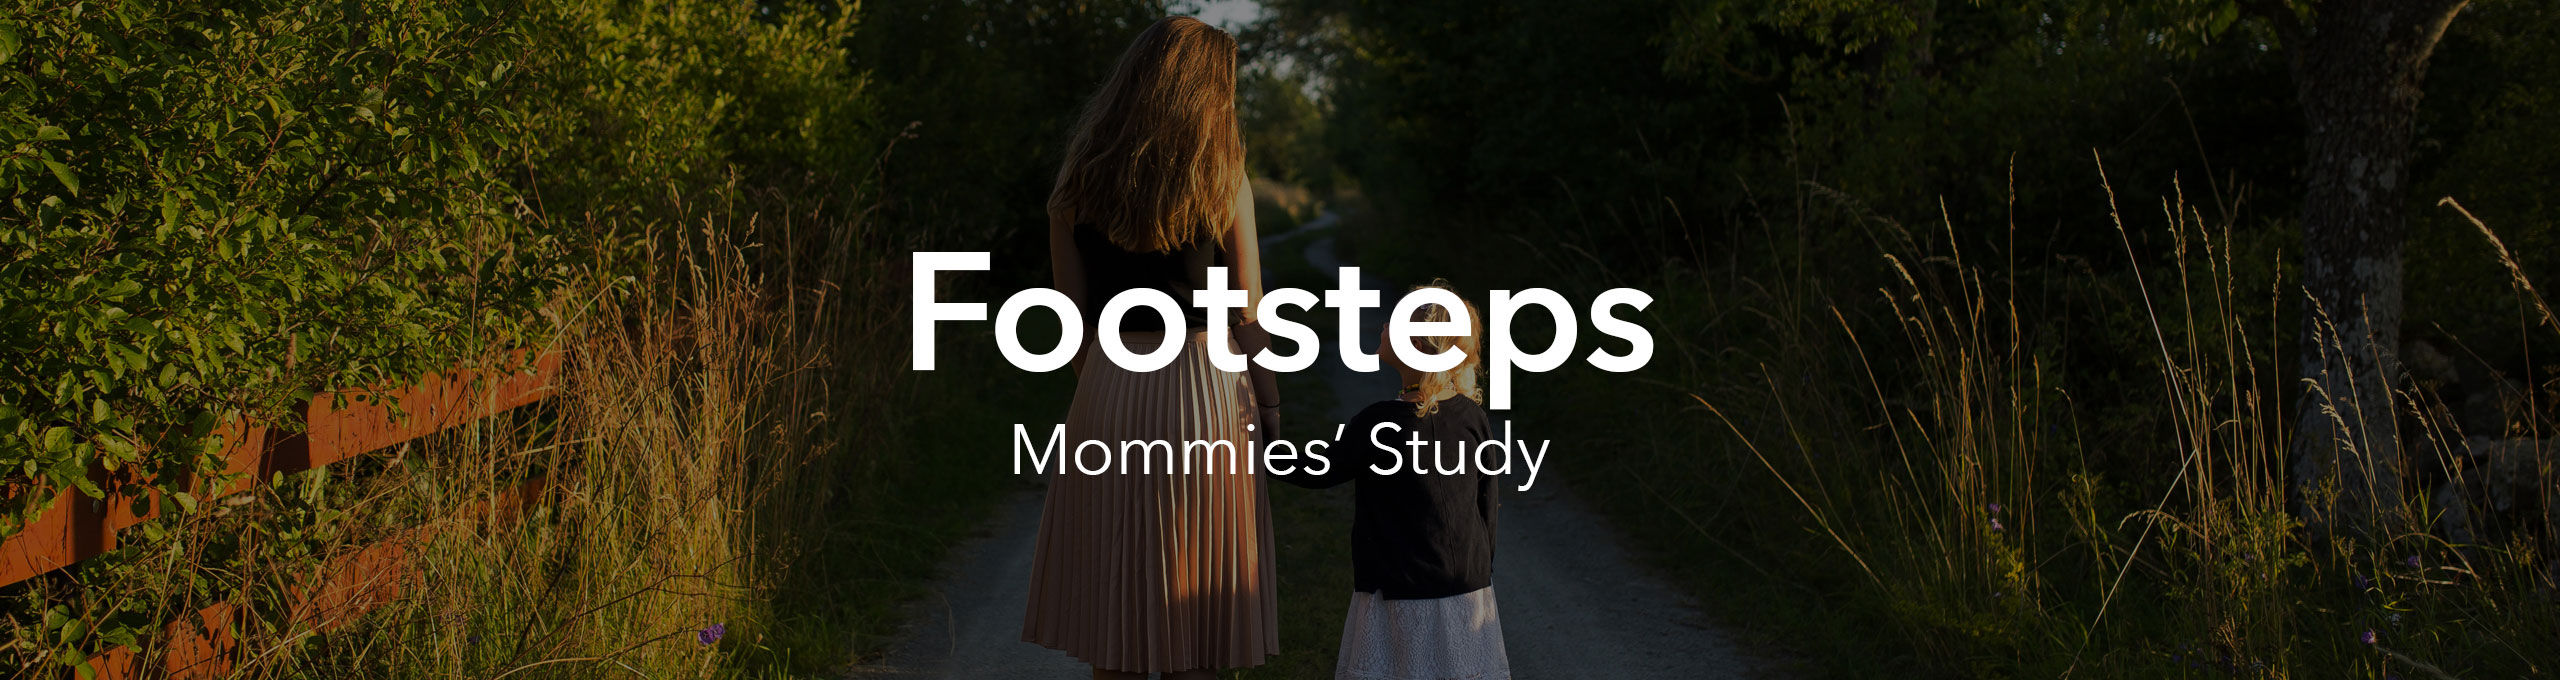 Mommies’ Study (Footsteps)